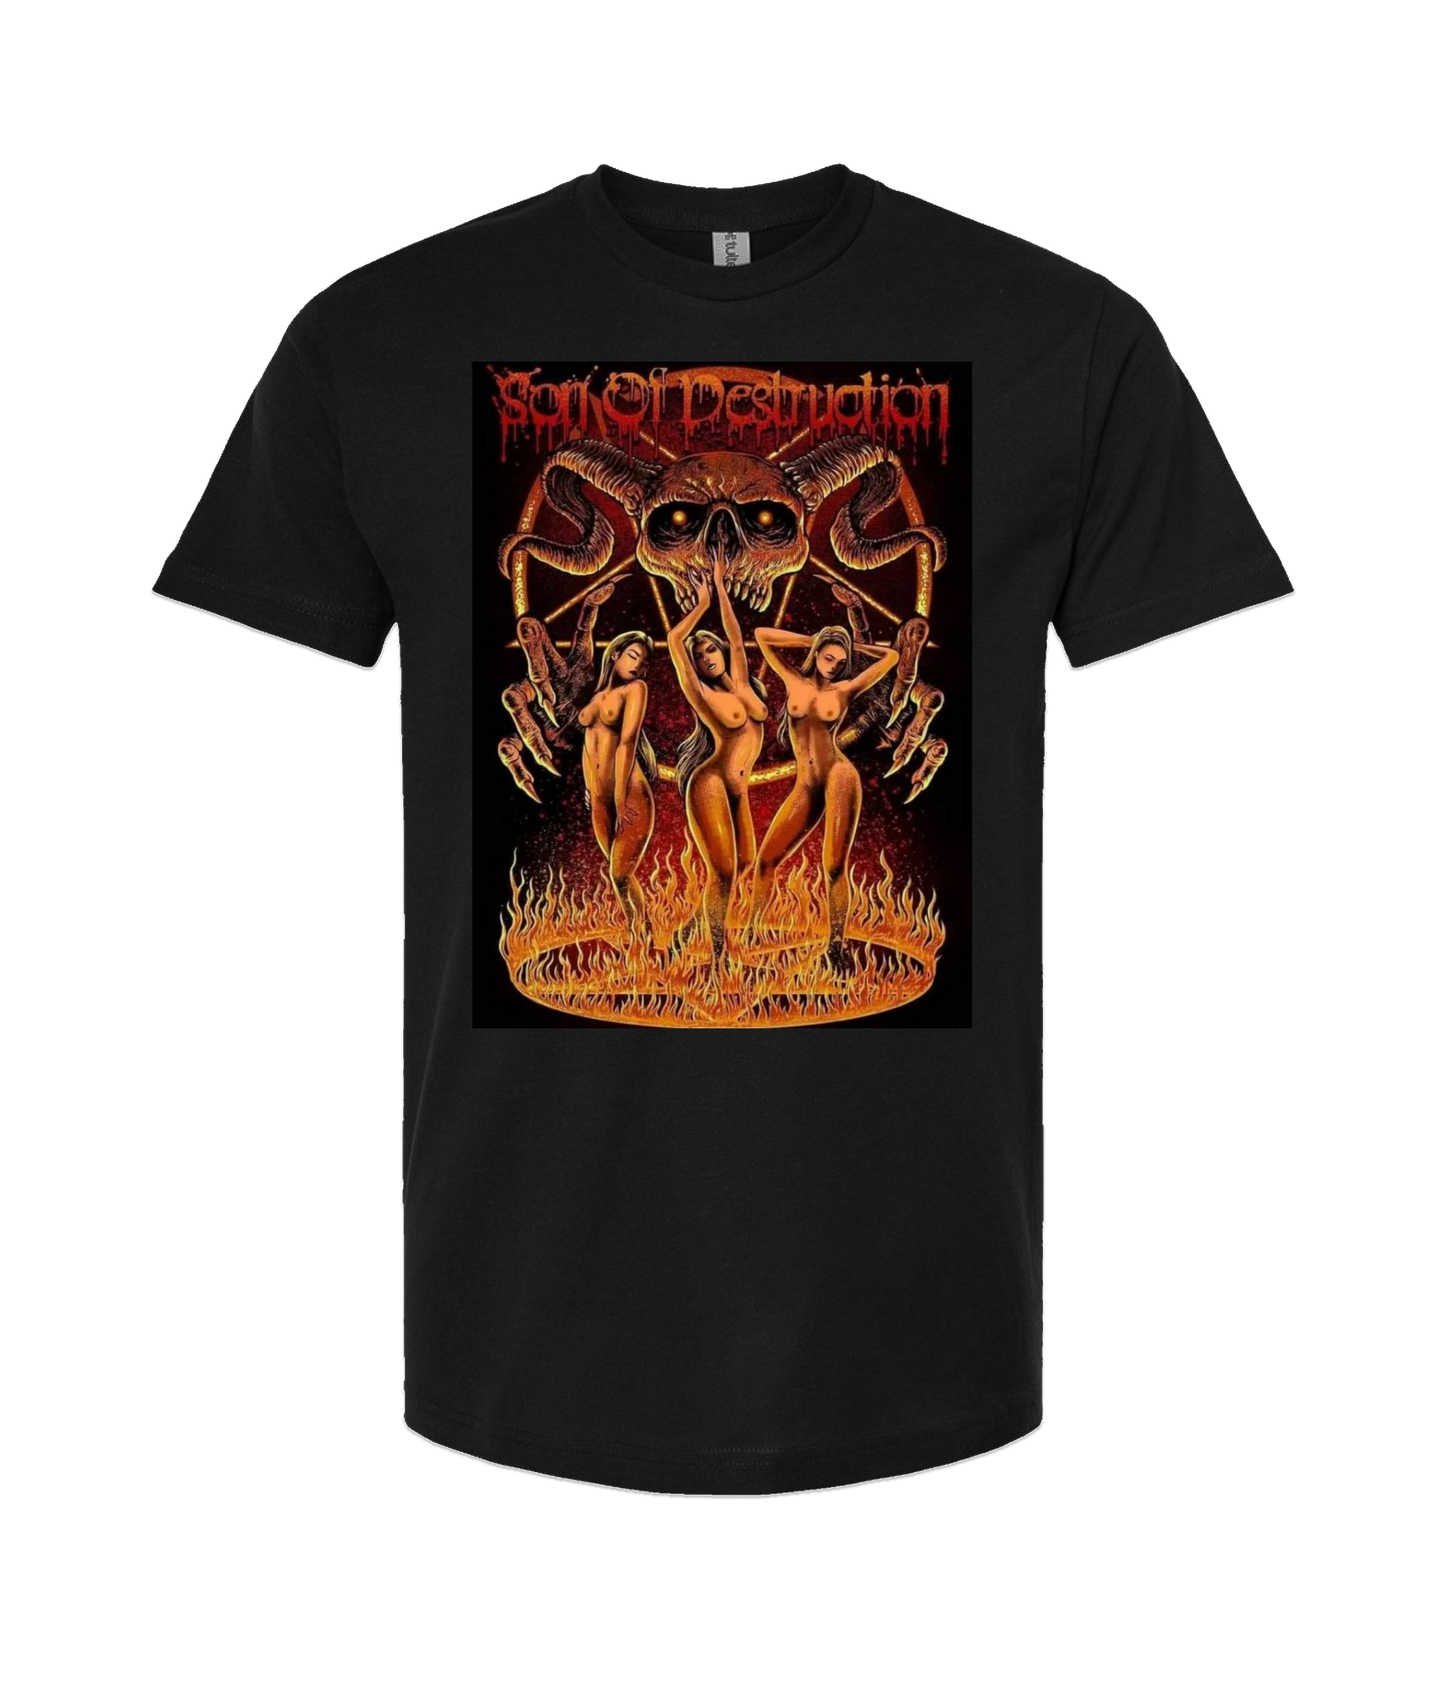 SonOfDestruction - Destruction Designed - Black T-Shirt